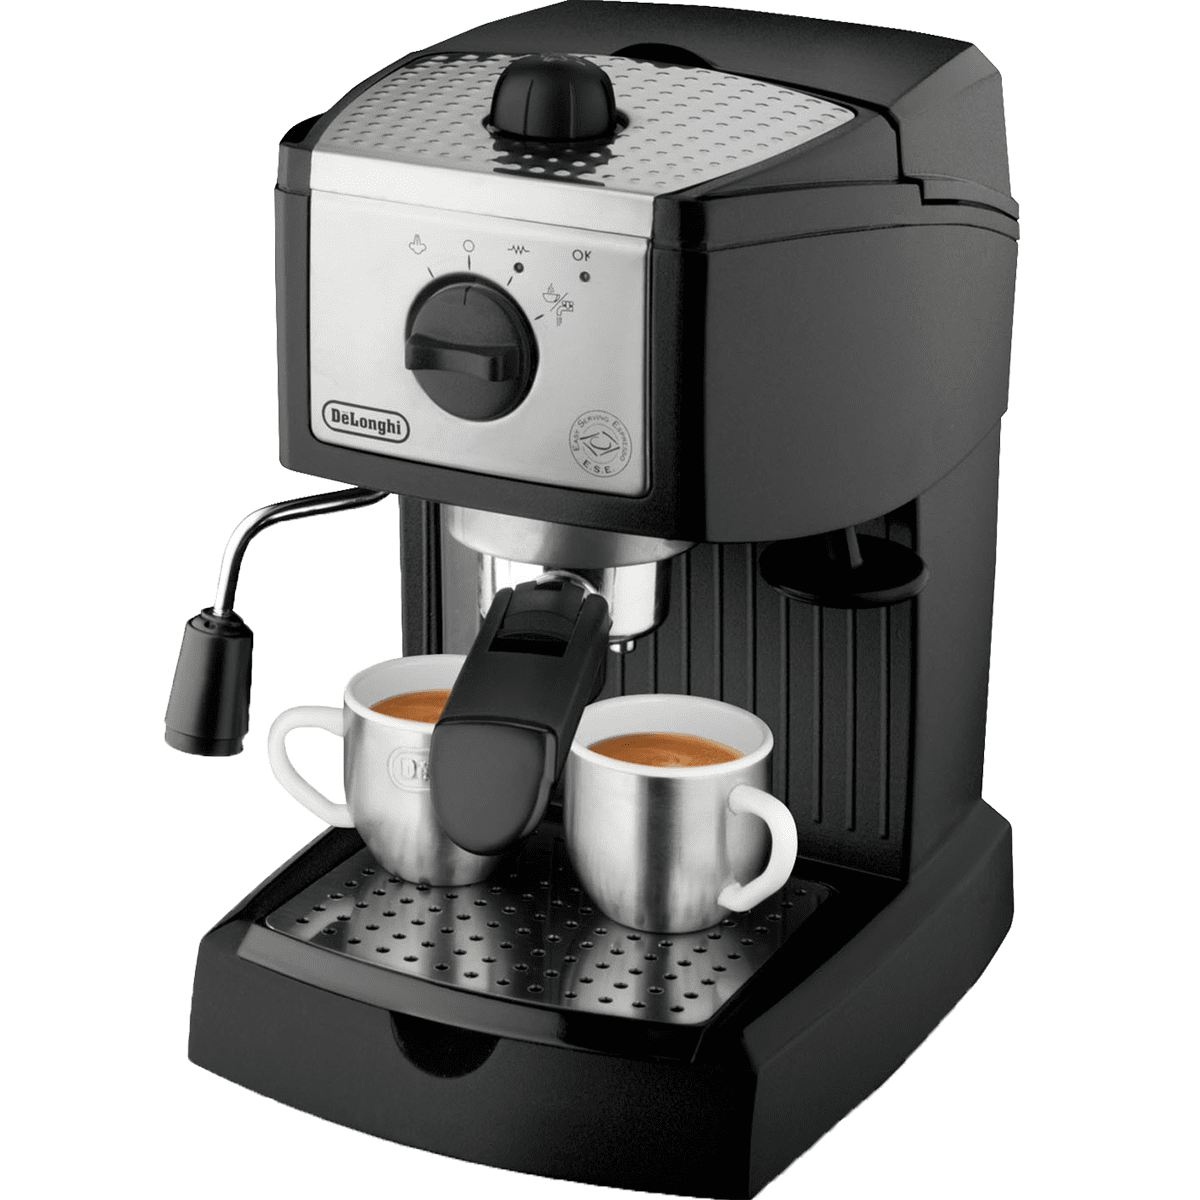 Delonghi Ec155 Manual Espresso And Cappuccino Machine